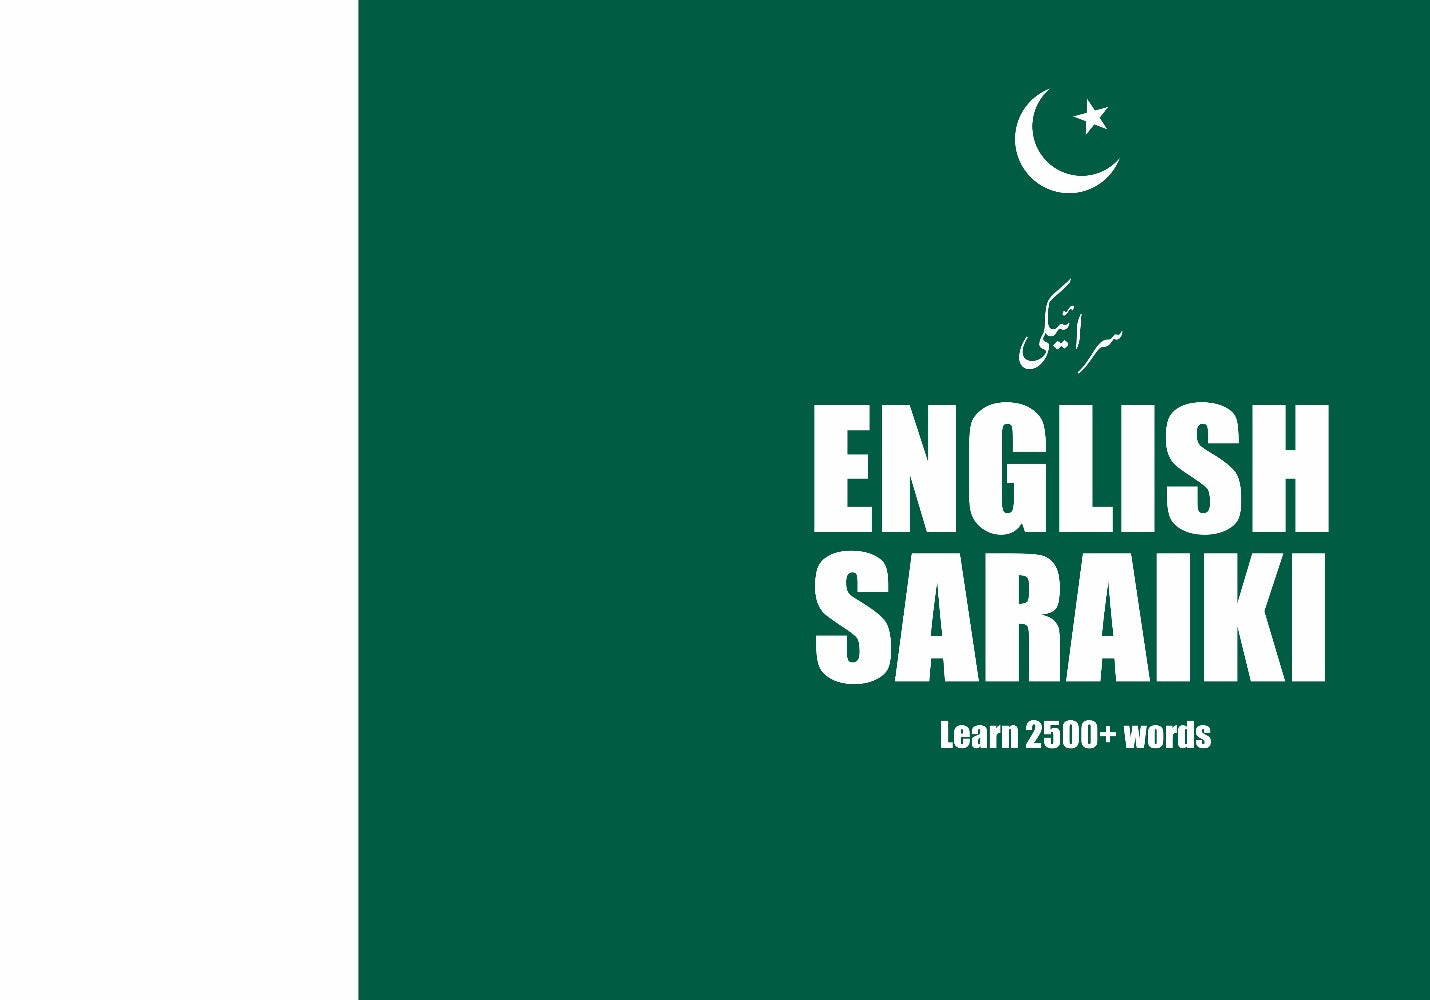 Saraiki language learning notebook cover